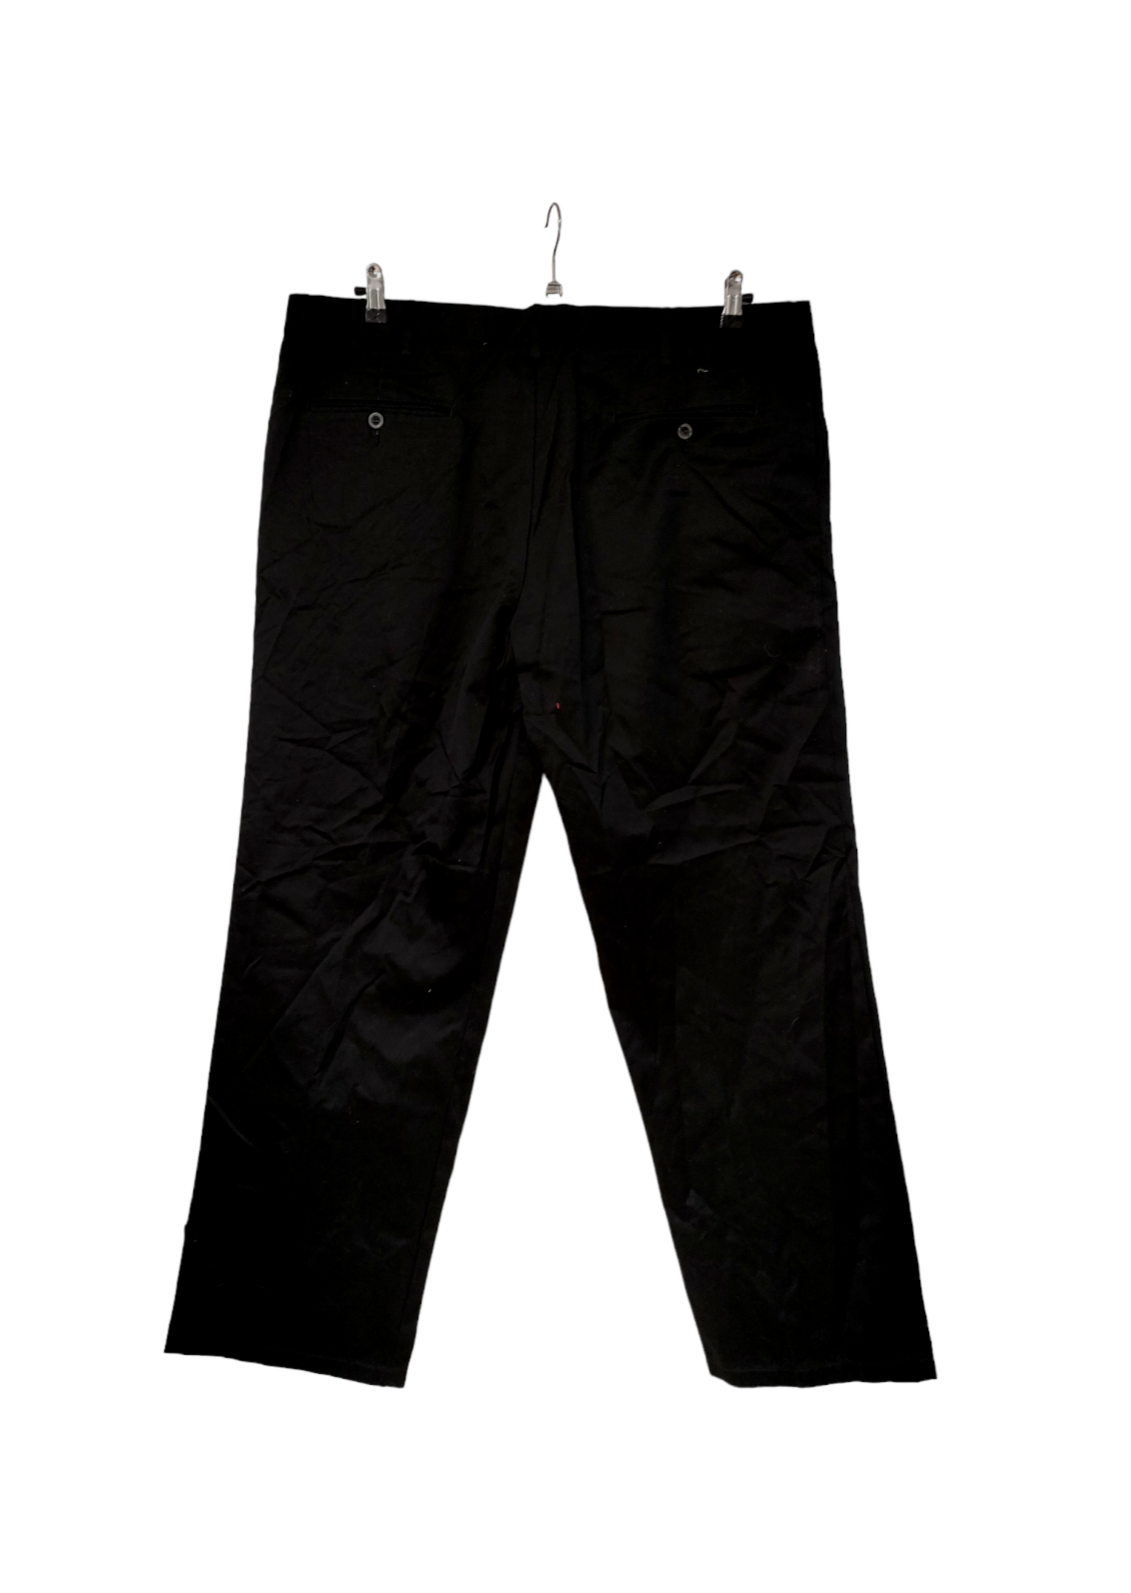 Aνδρικό Παντελόνι DOCKERS σε Μαύρο Χρώμα (No 42 - 3XL)